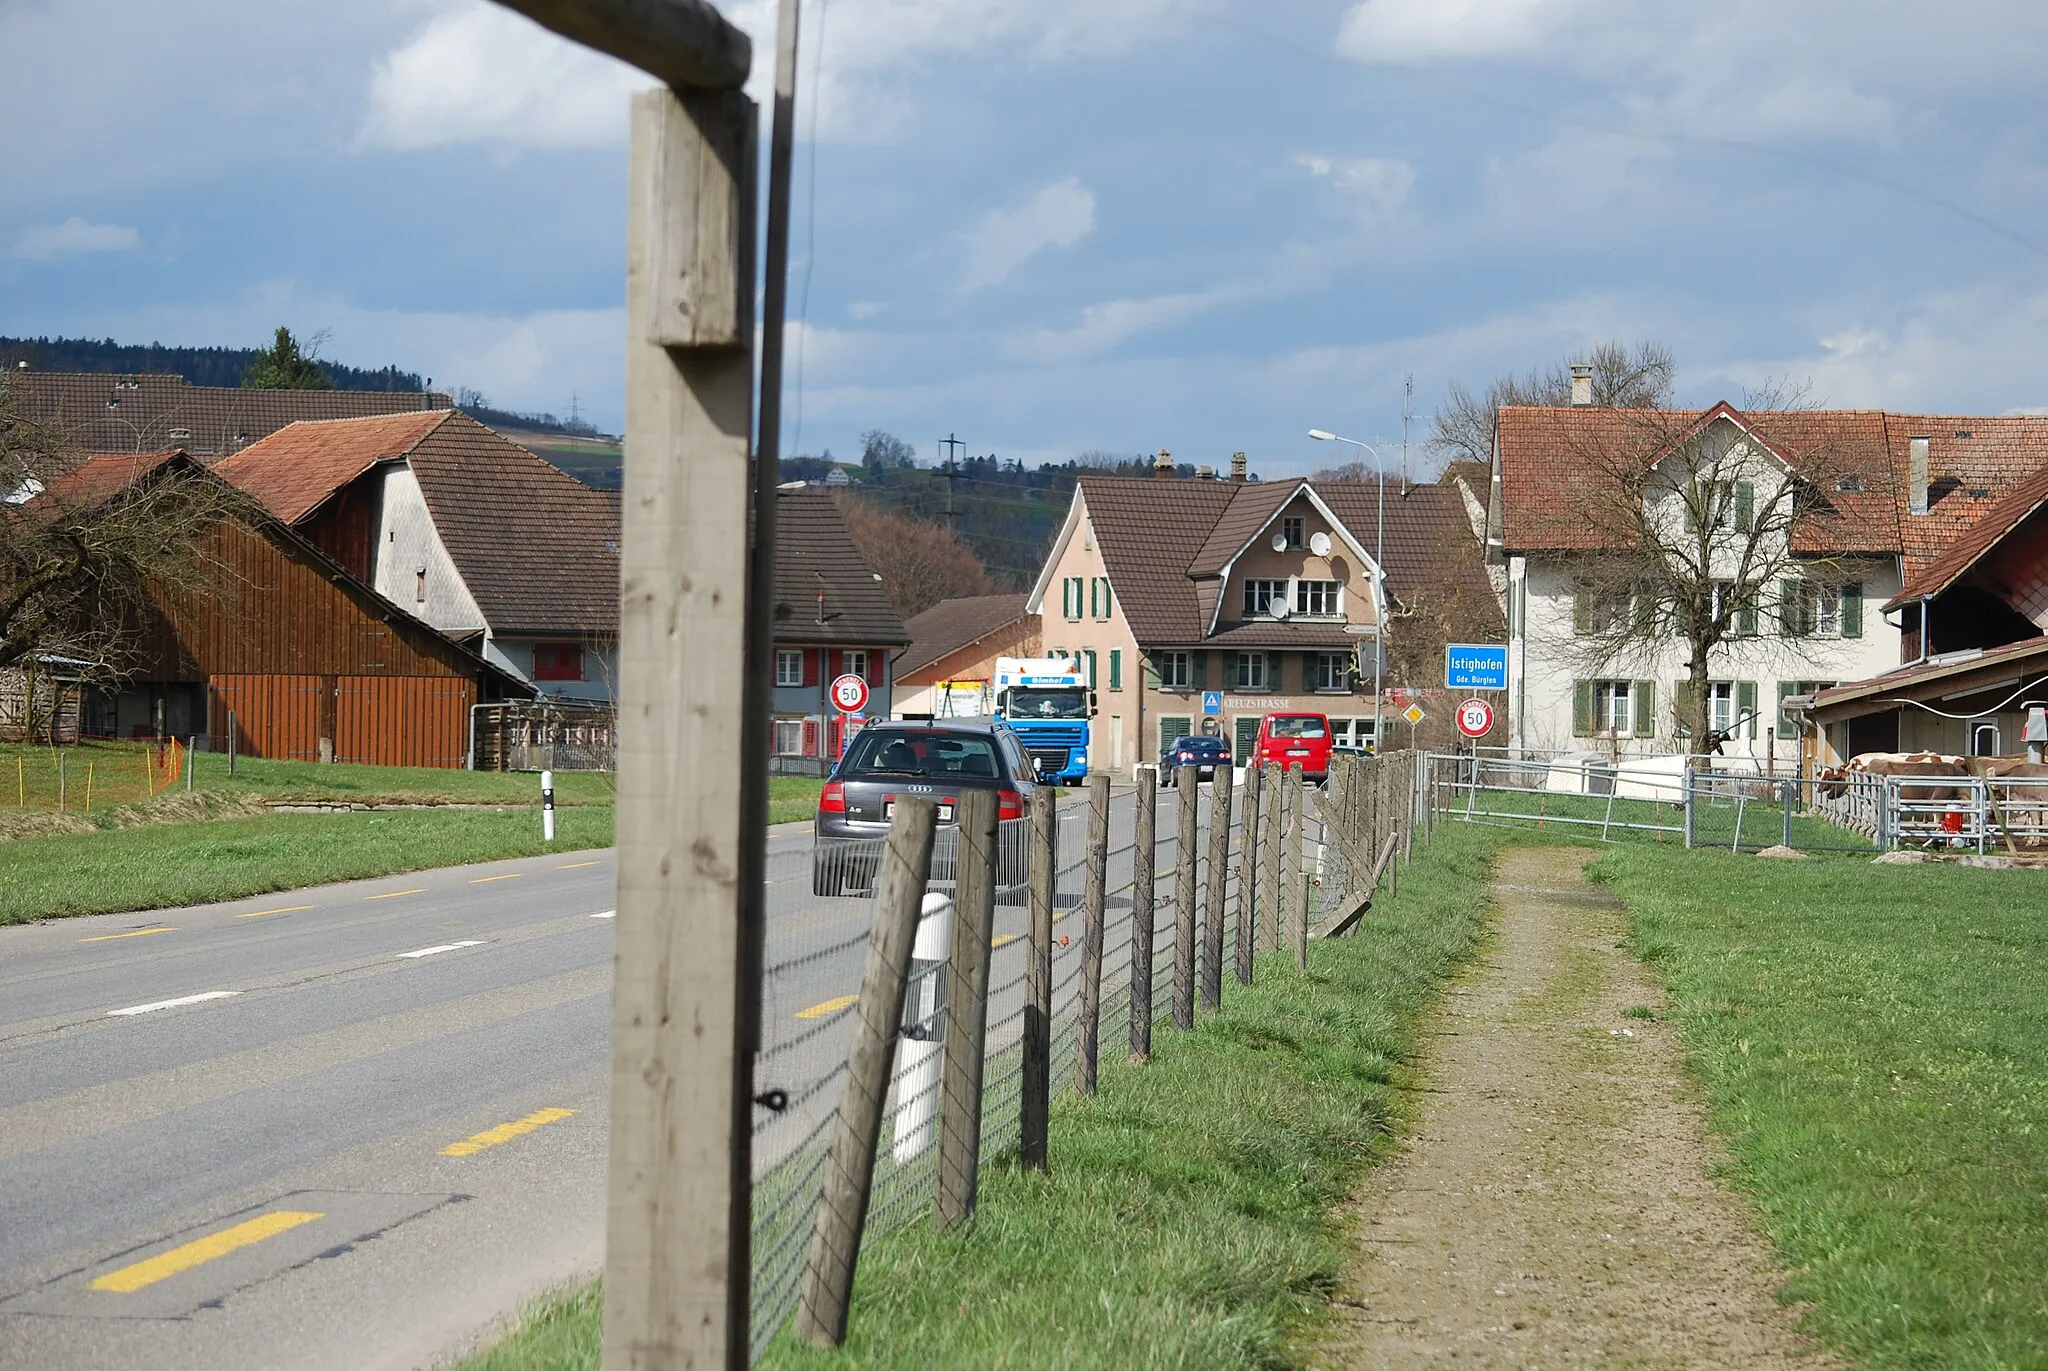 Photo showing: Istighofen, municipality of Bürglen, canton of Thurgovia, Switzerland